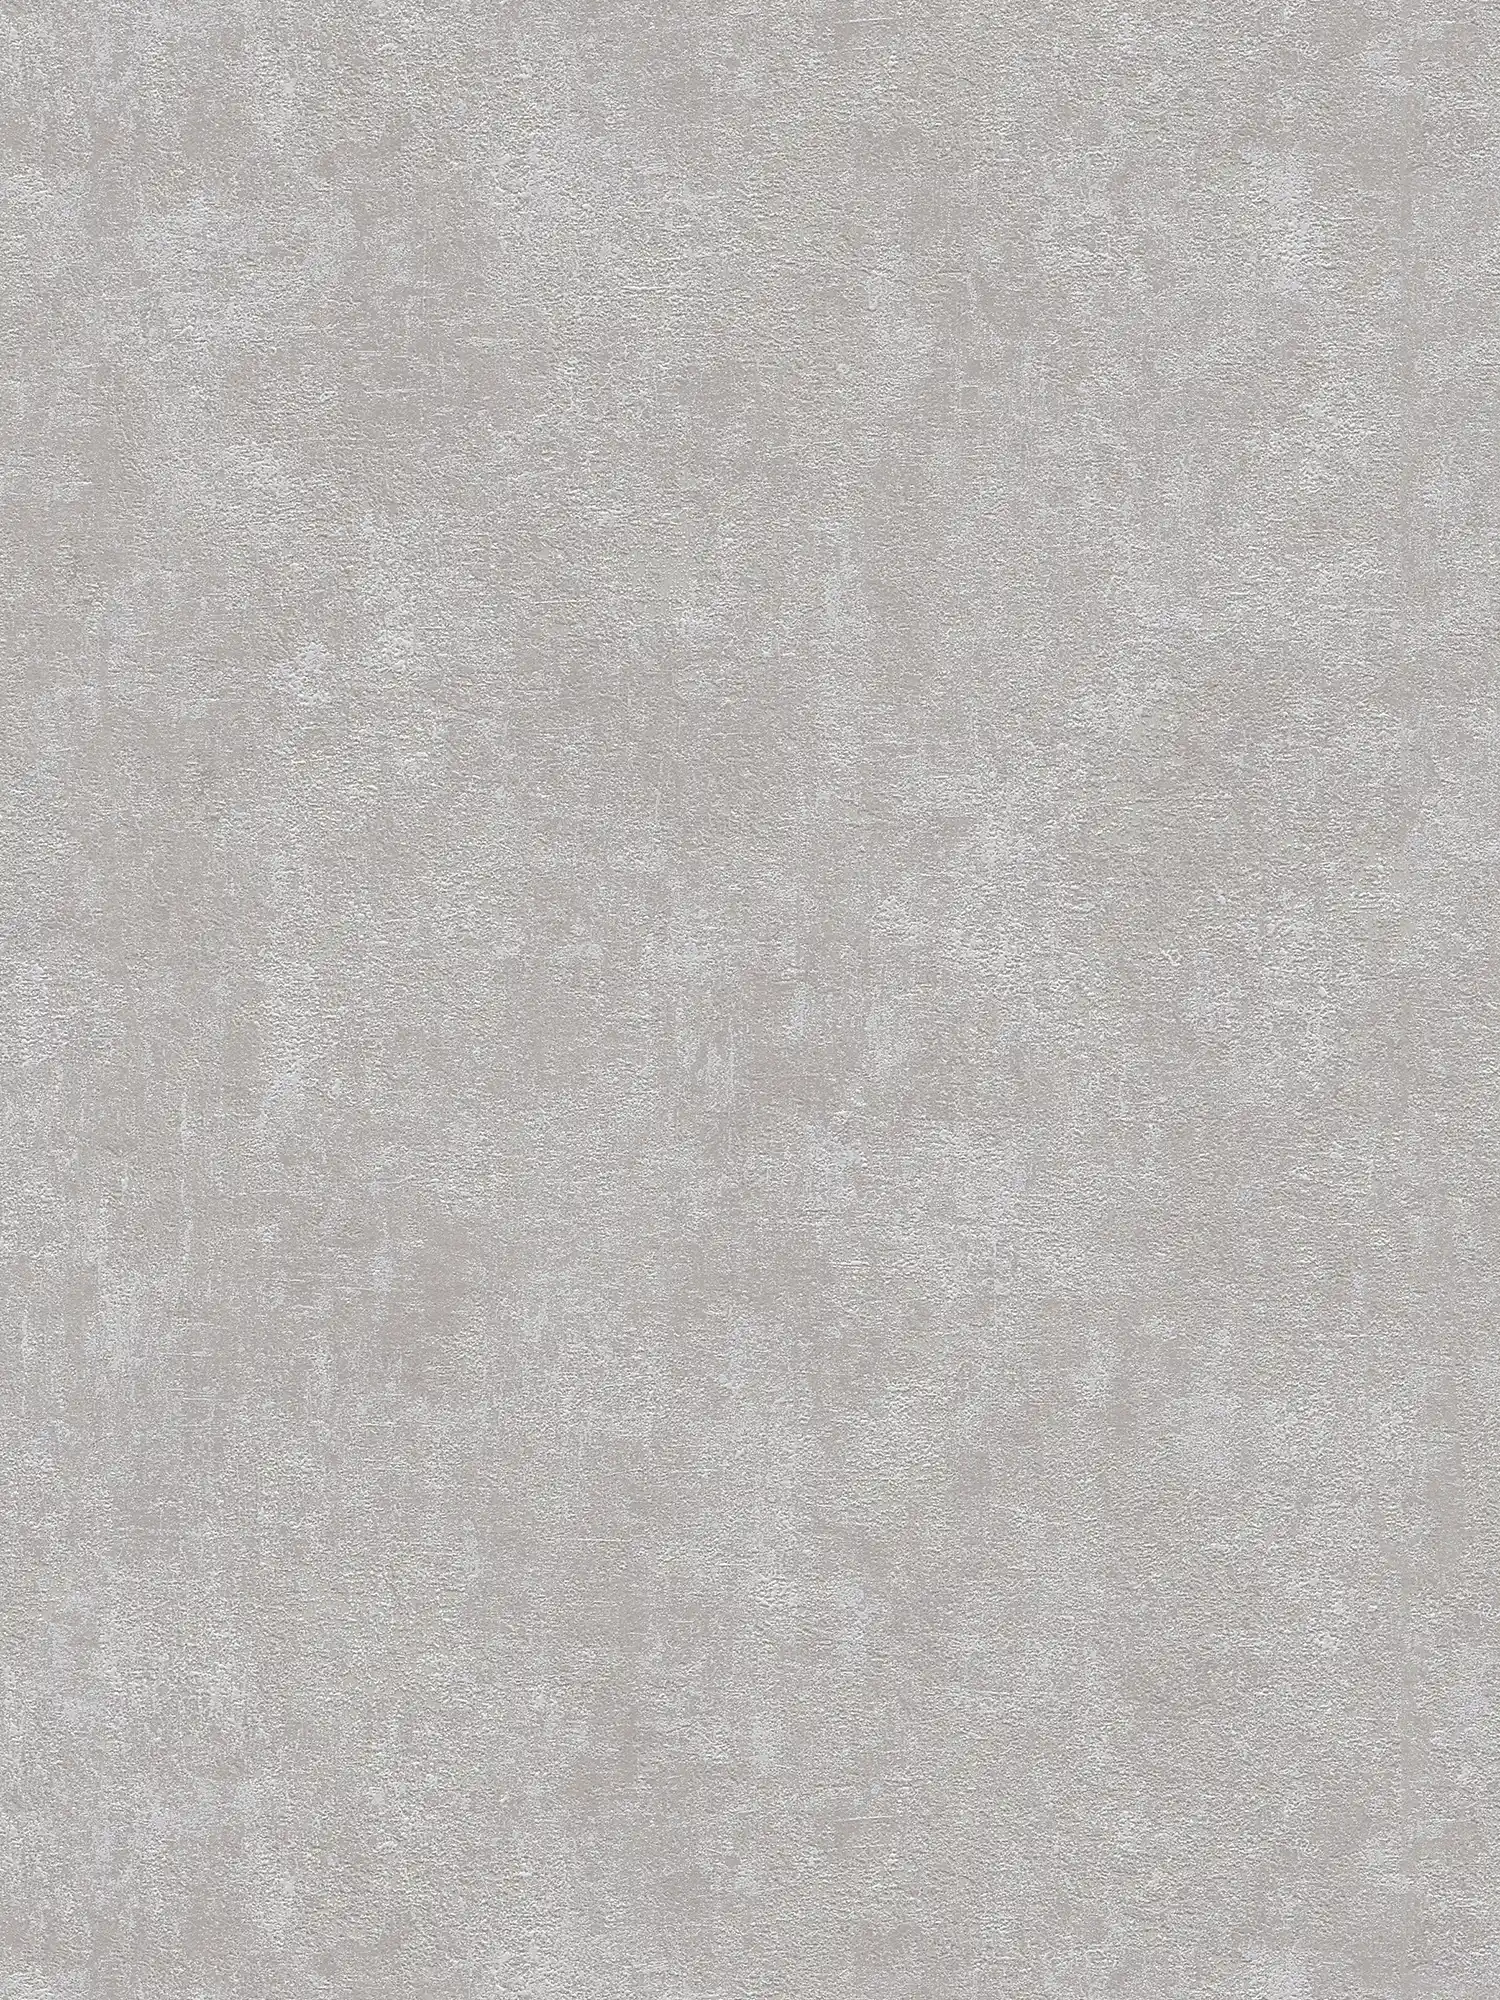 Wallpaper plaster structure, plain & satin - grey
